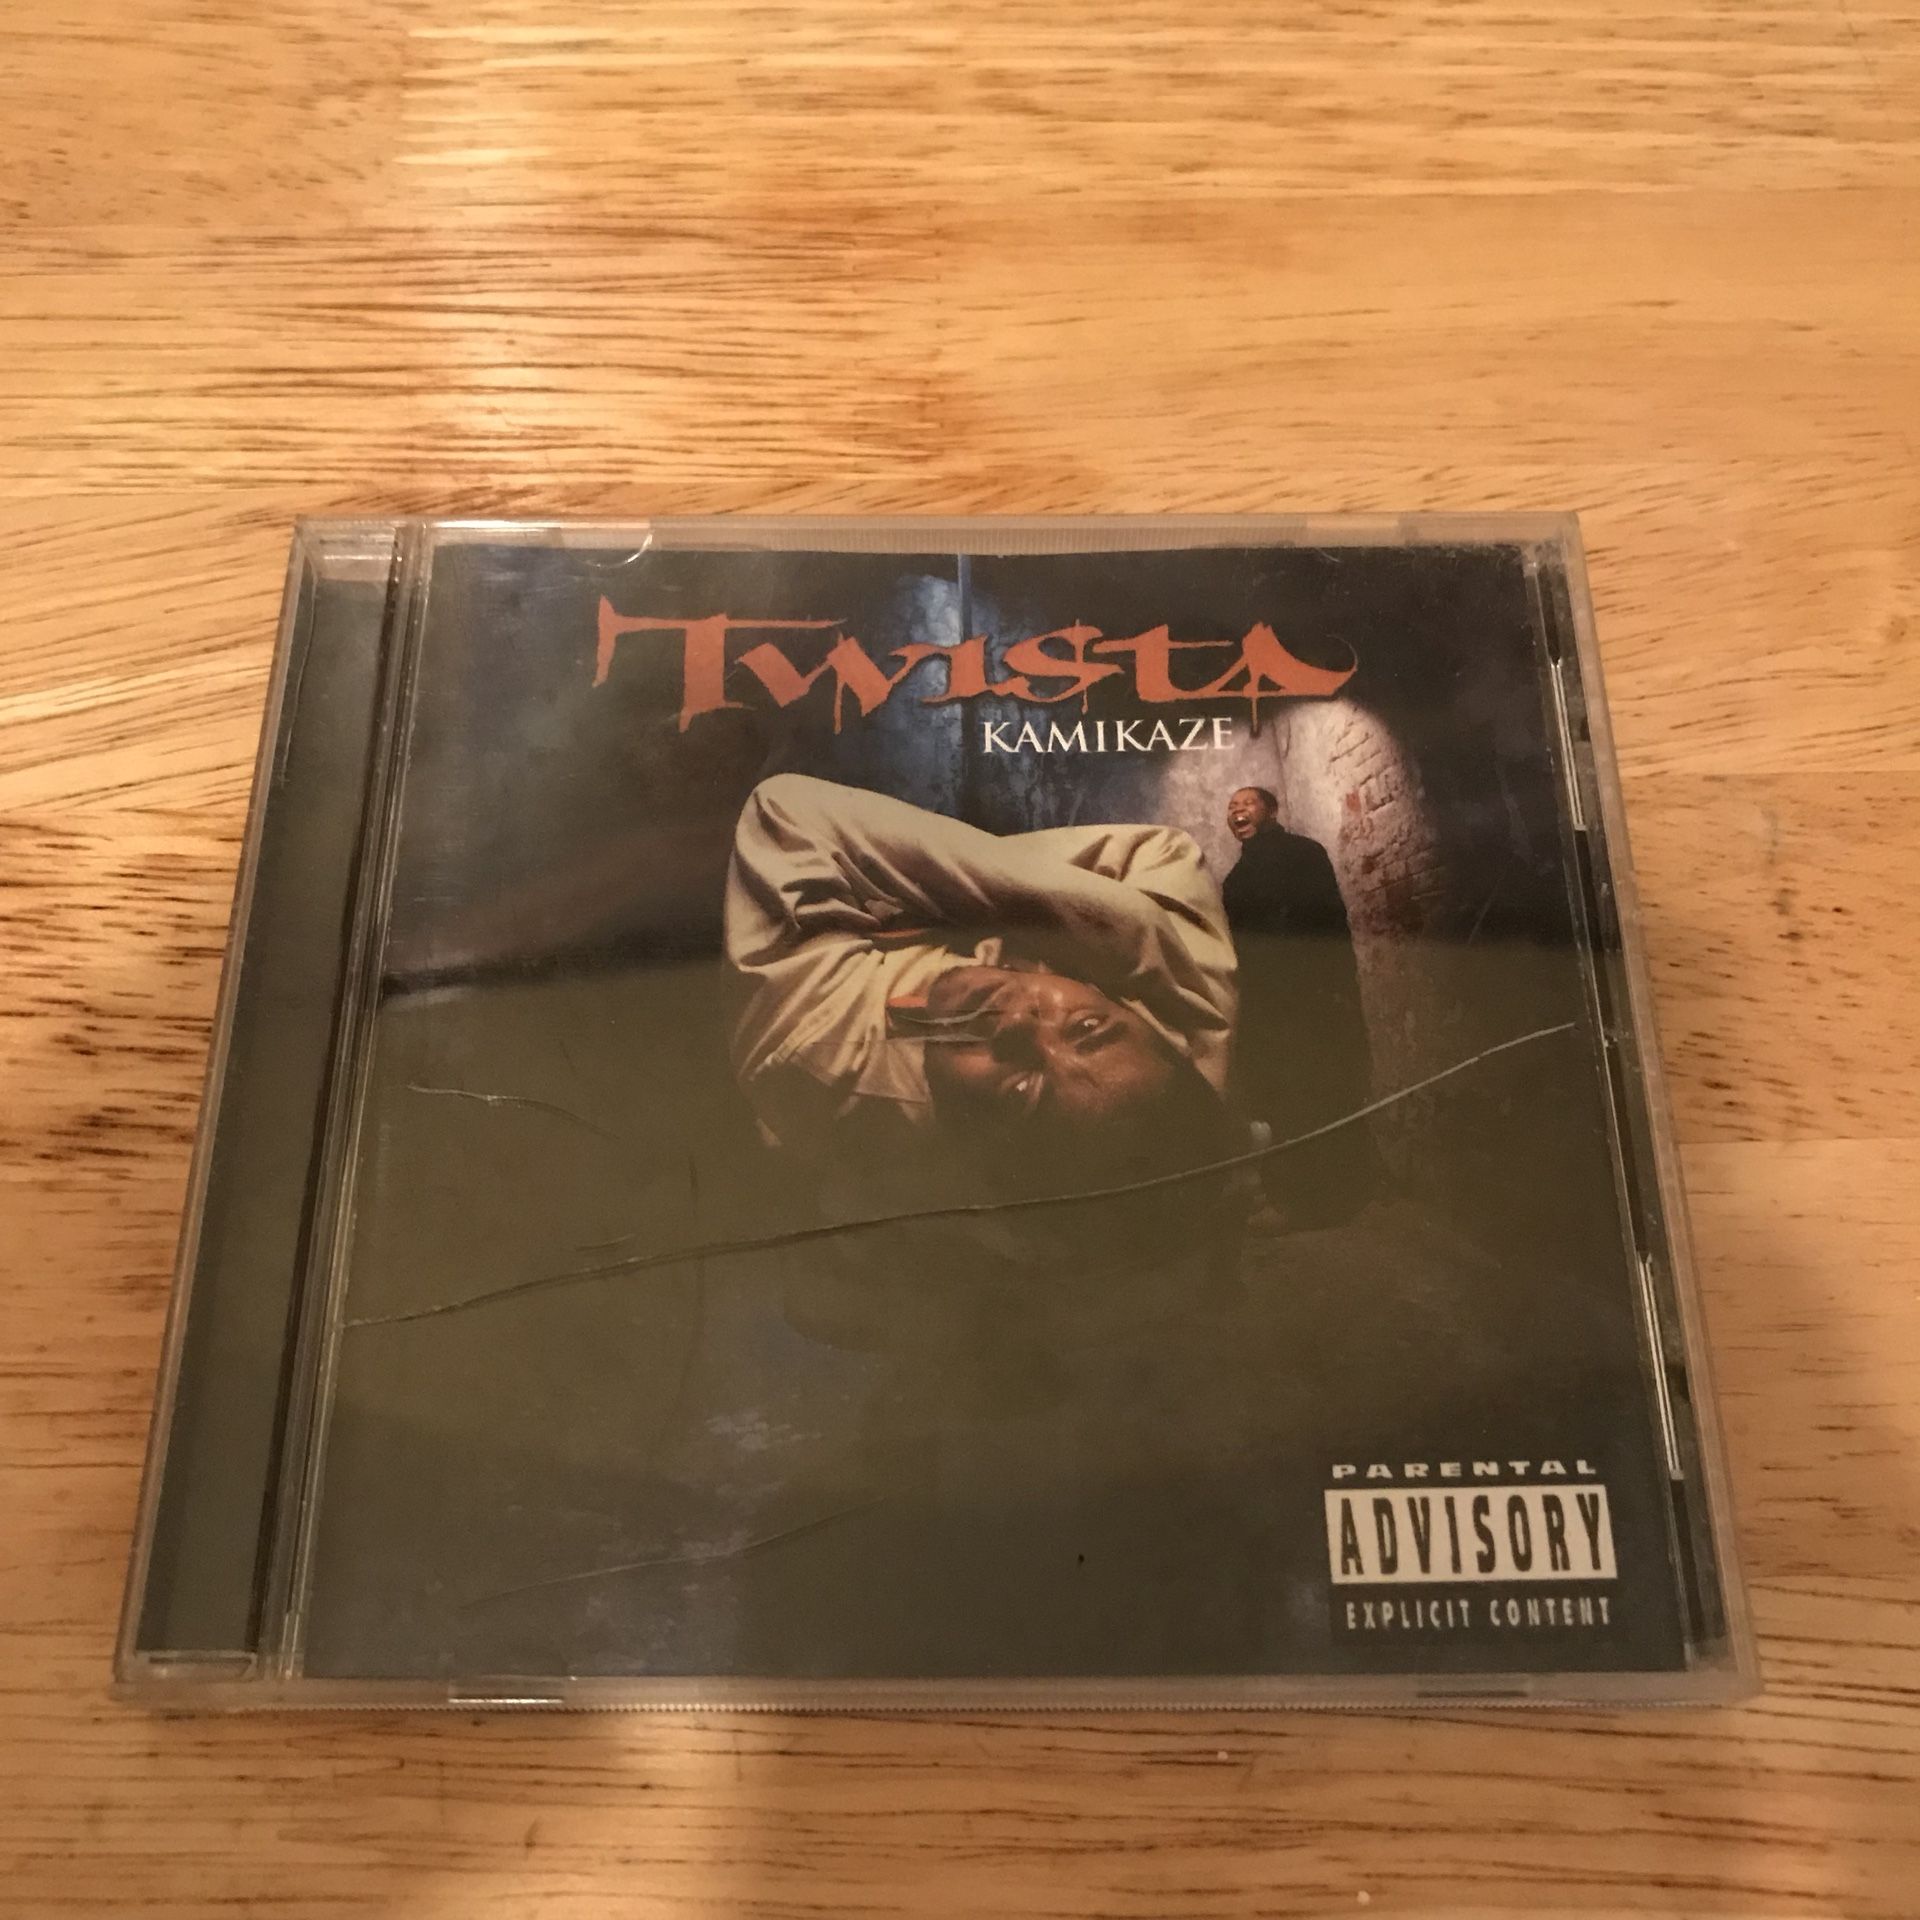 Twista CD (Case is cracked)